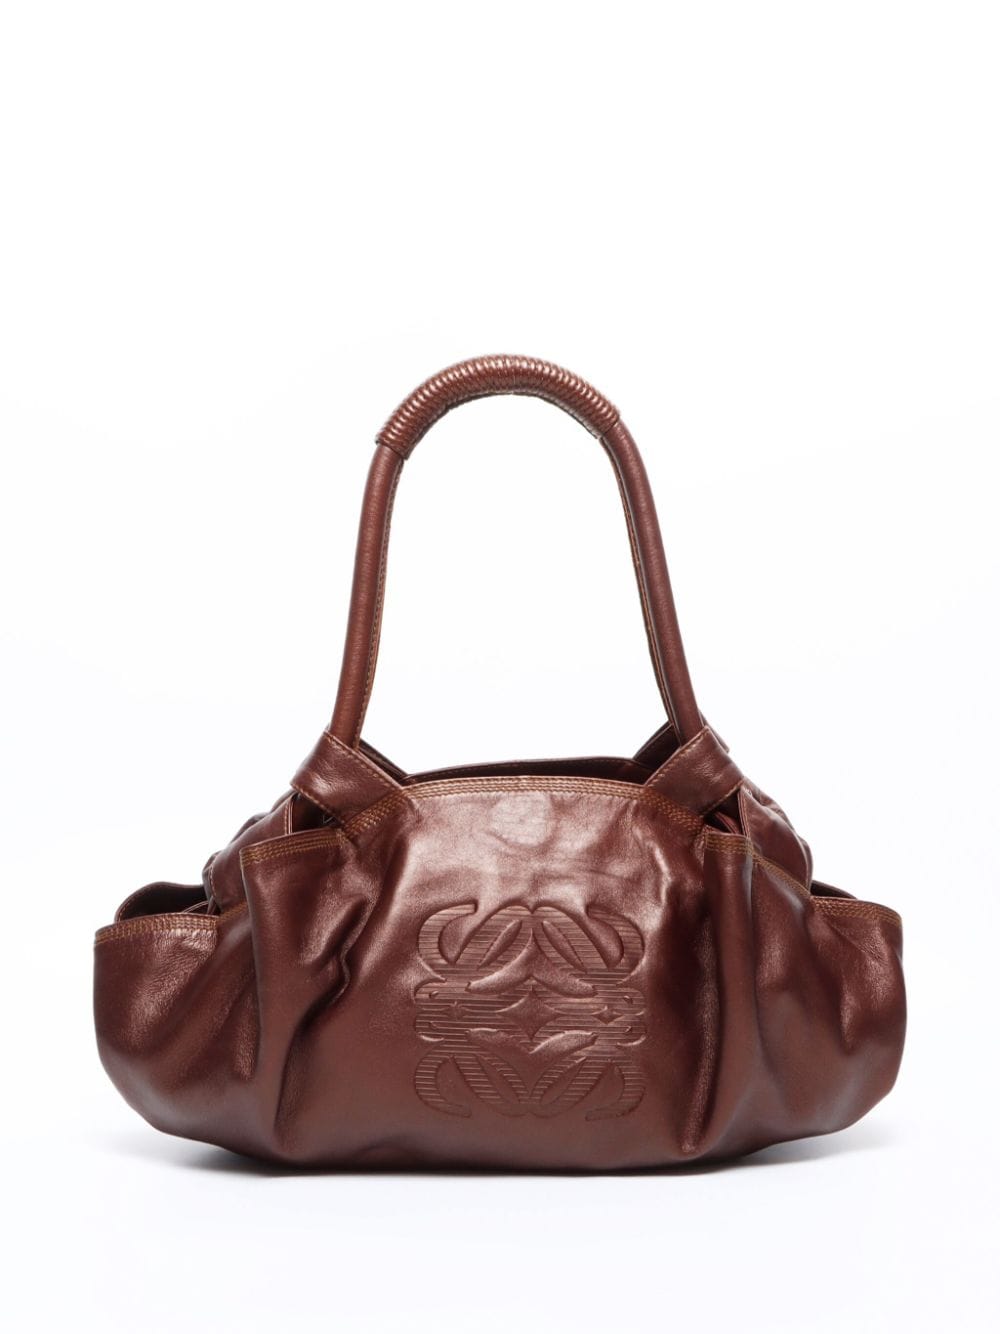 Anagram-debossed leather handbag